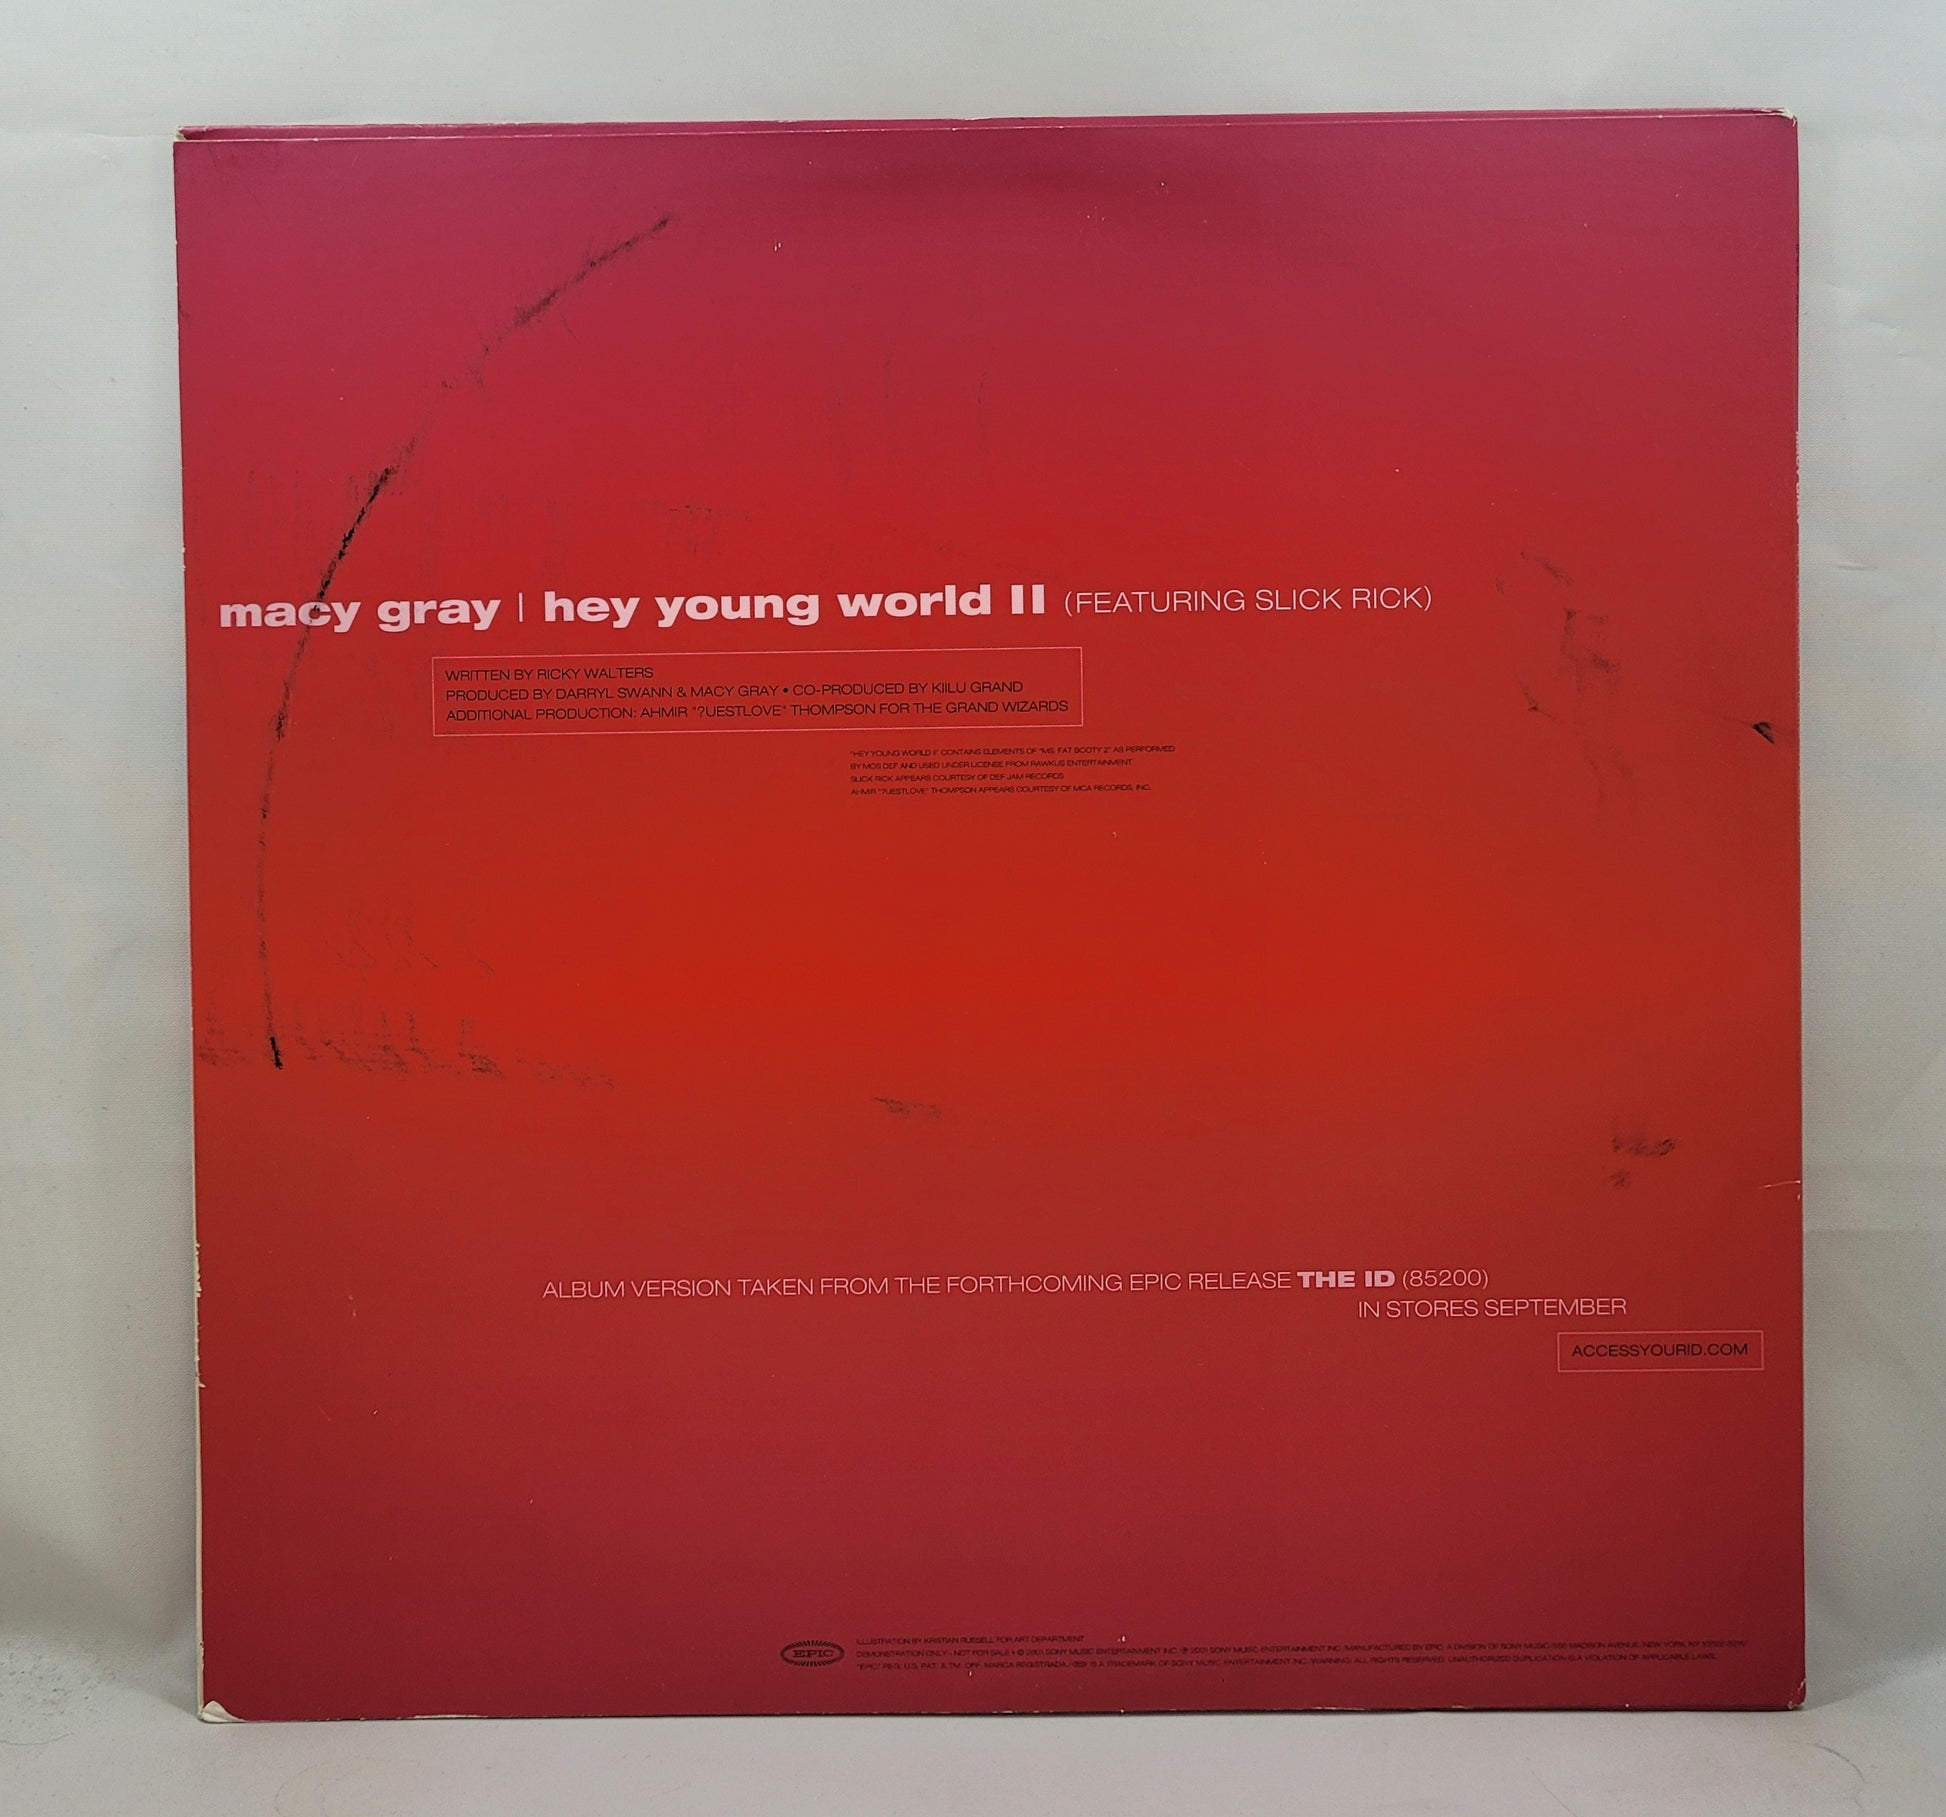 Macy Gray Featuring Slick Rick - Hey Young World II [2001 Promo] [Vinyl Record 12" Single]